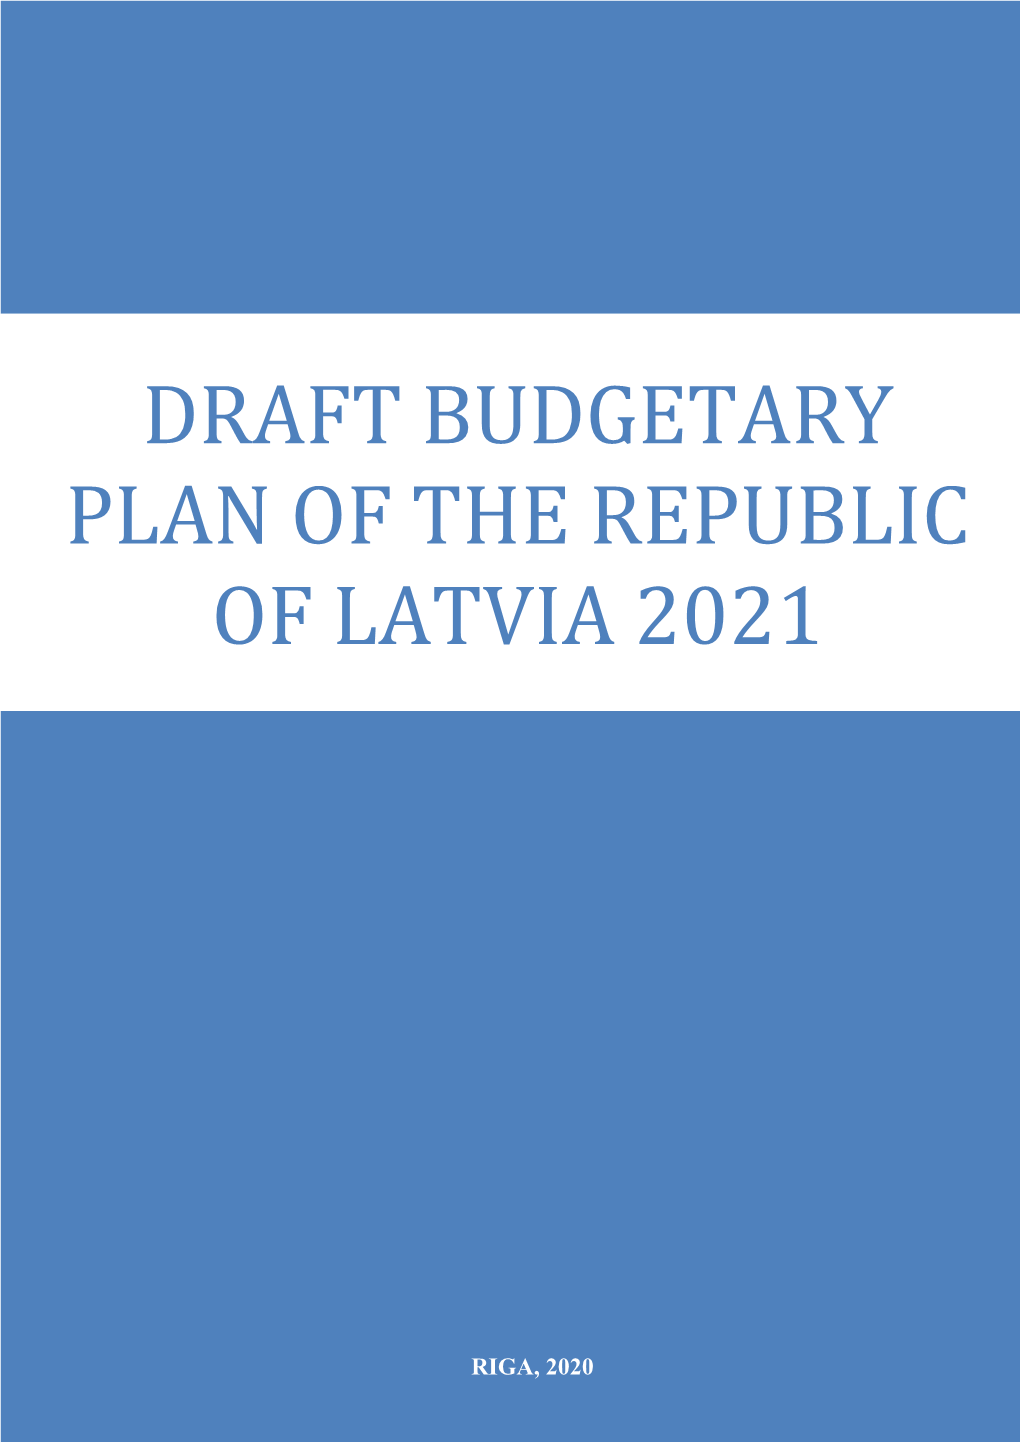 Draft Budgetary Plan of the Republic of Latvia 2021